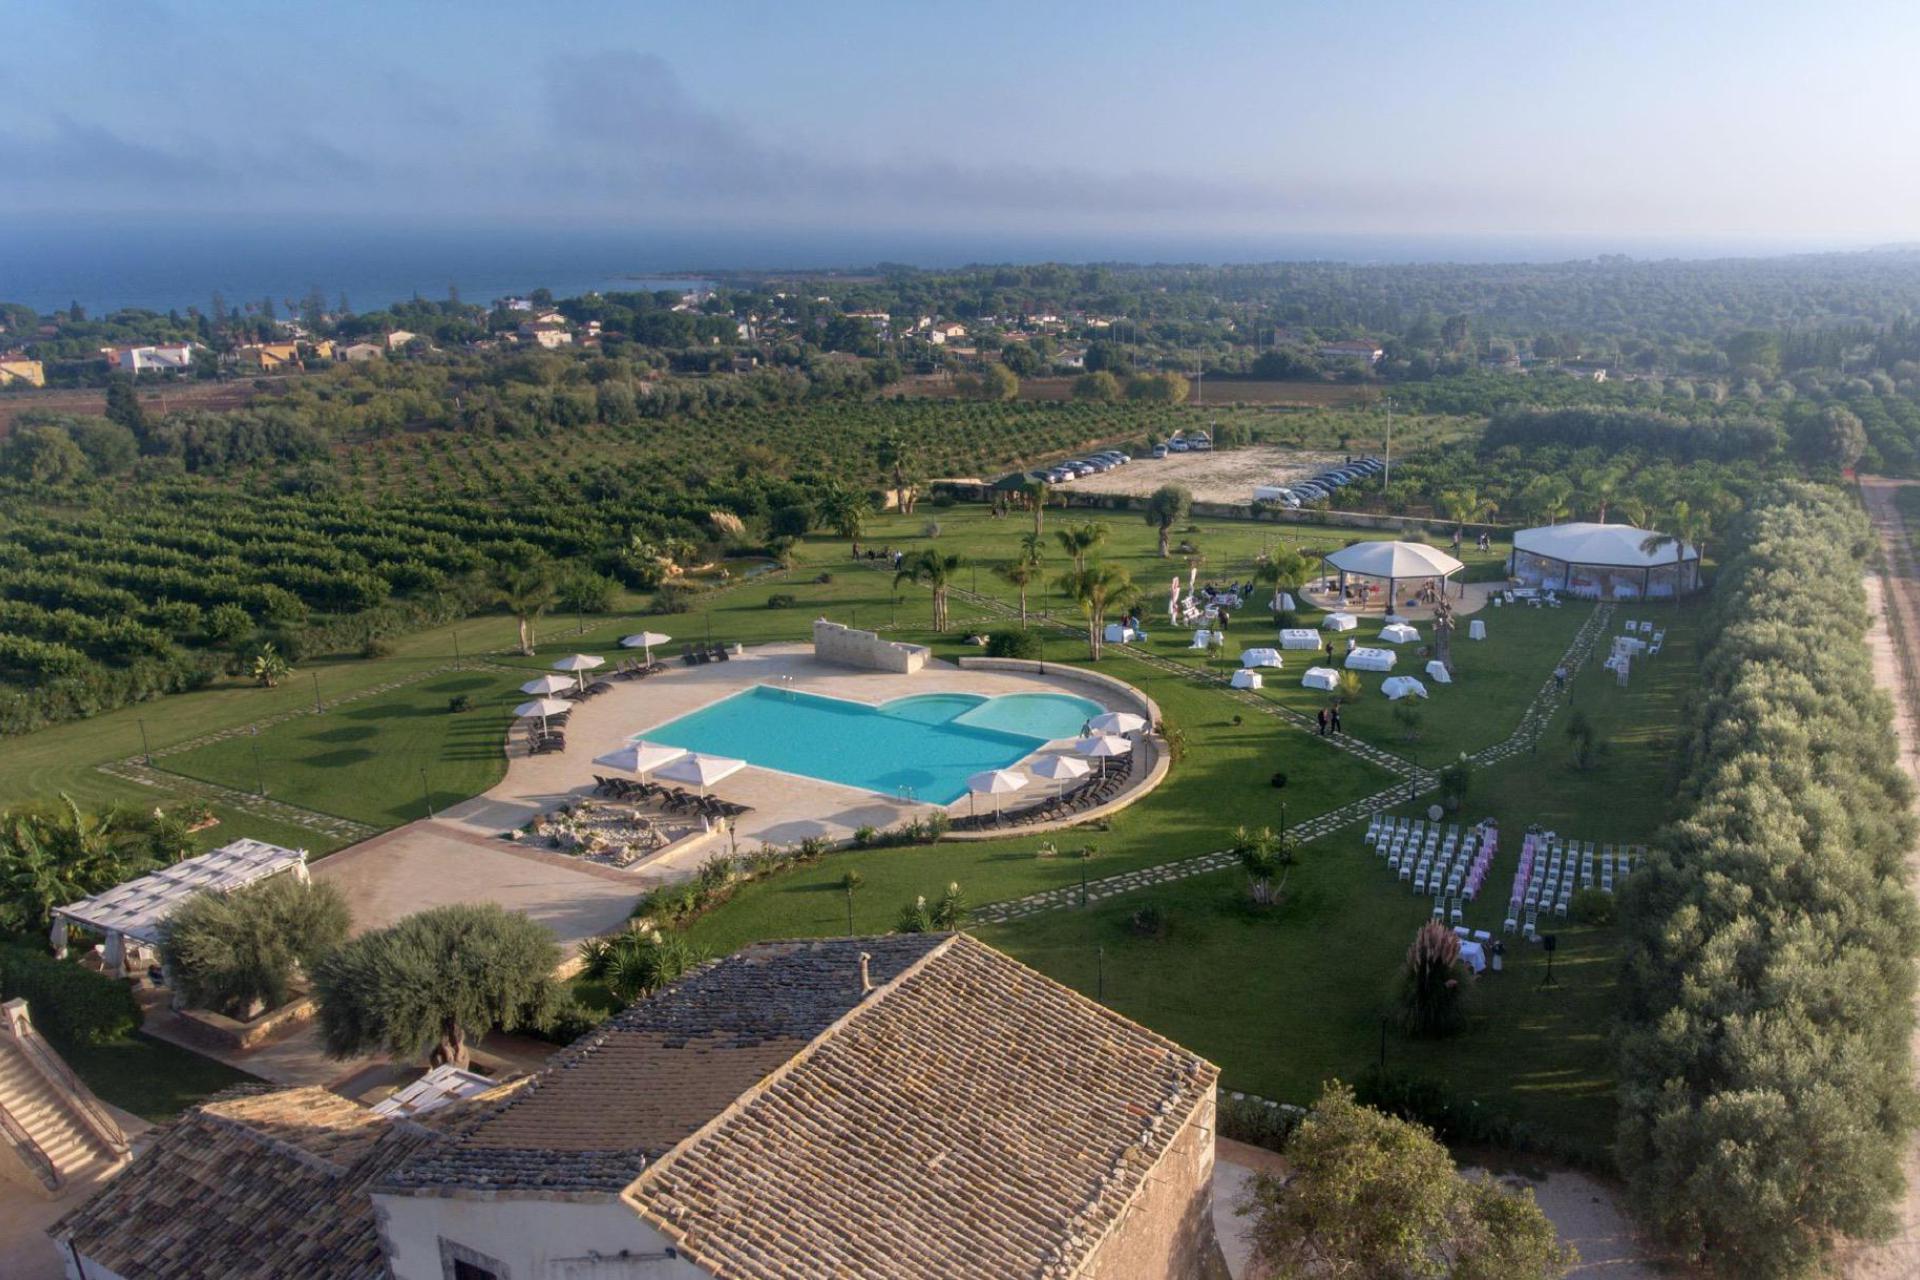 Agriturismo Sicilie Agriturismo met groot zwembad nabij strand